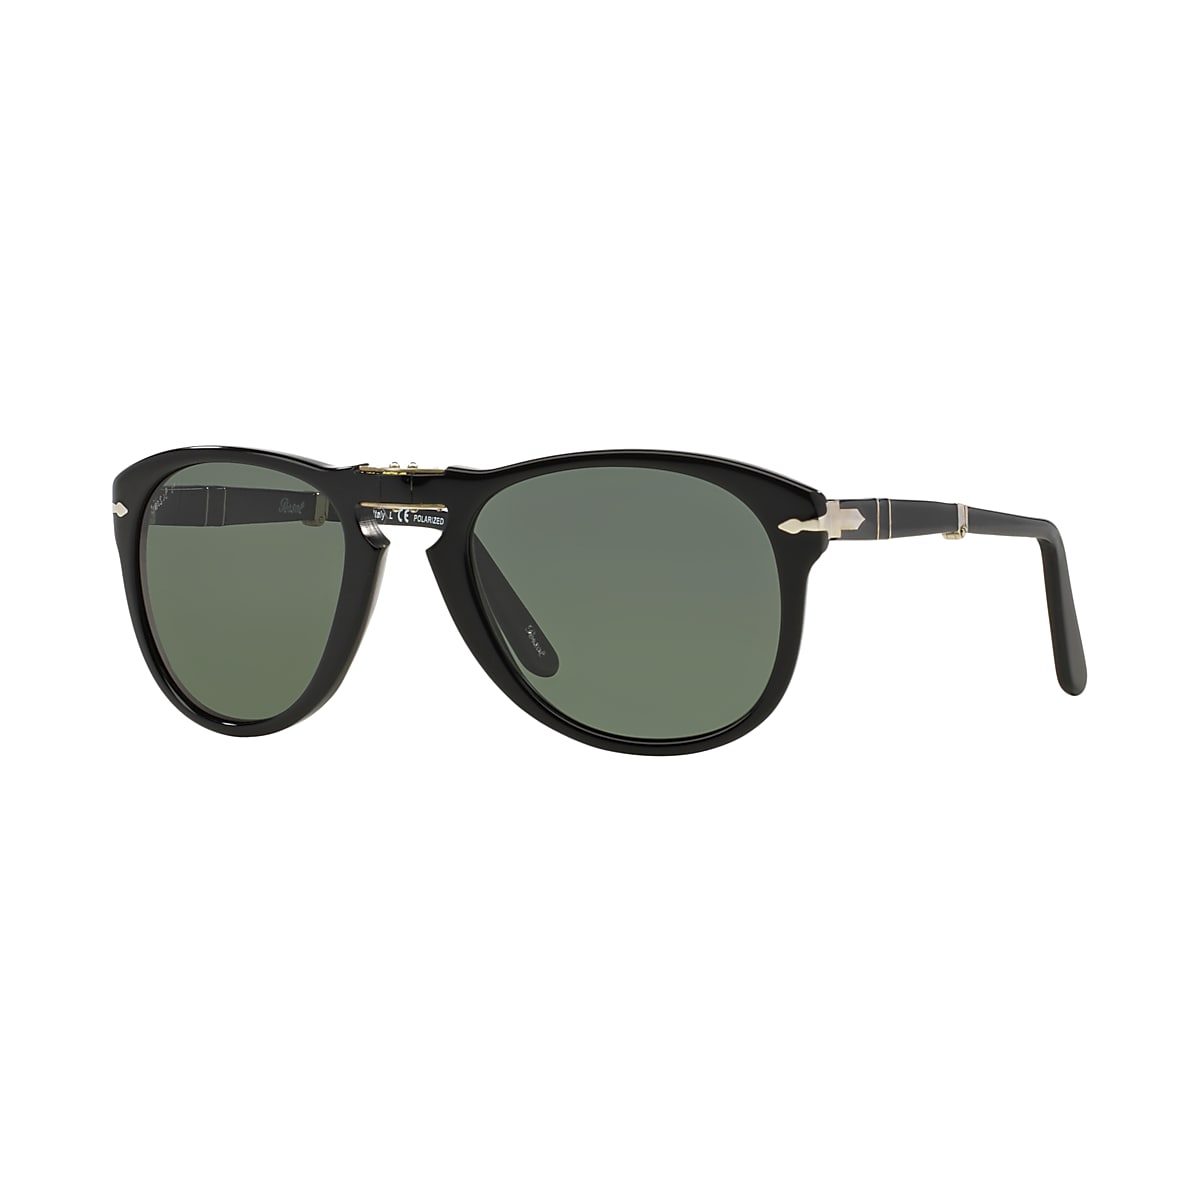 Persol 714 - Original Sunglasses in Black